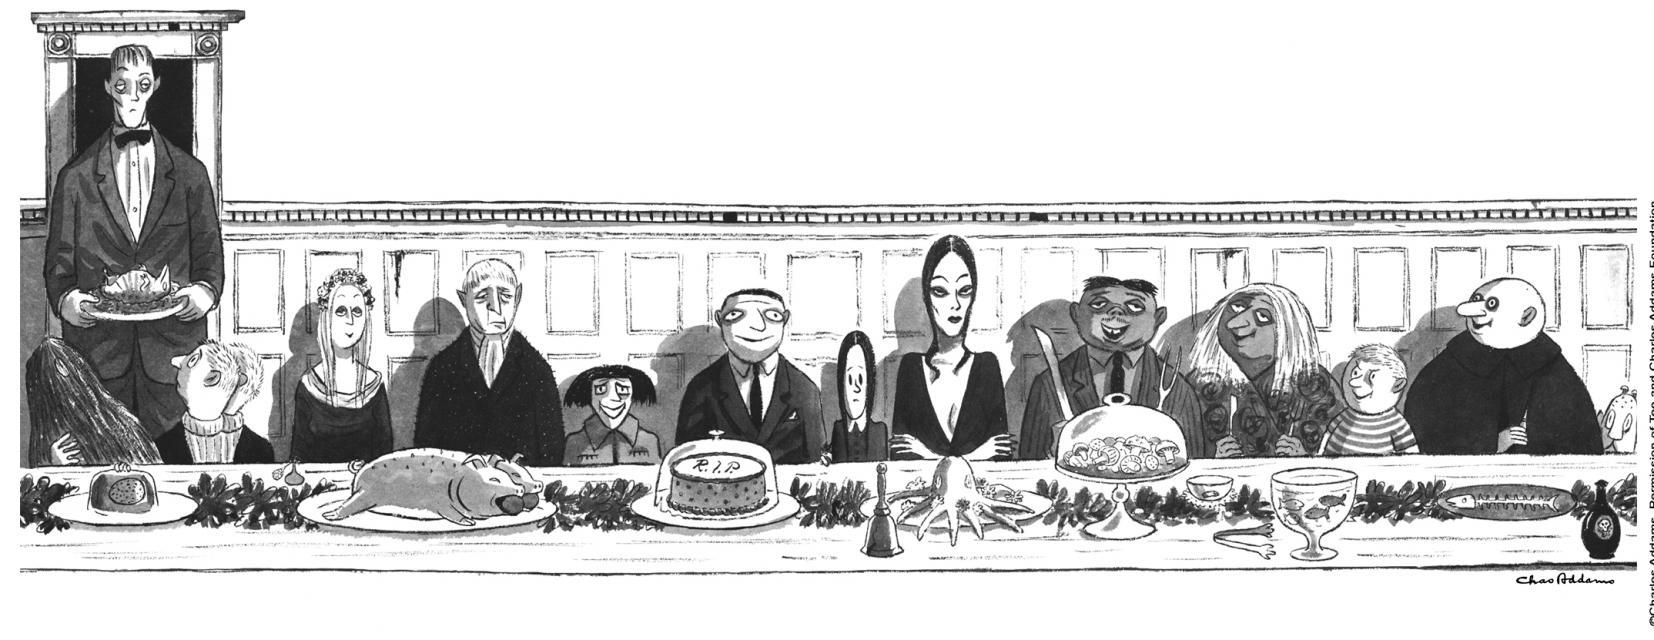 Illustration de la famille Addams par Charles Addams.